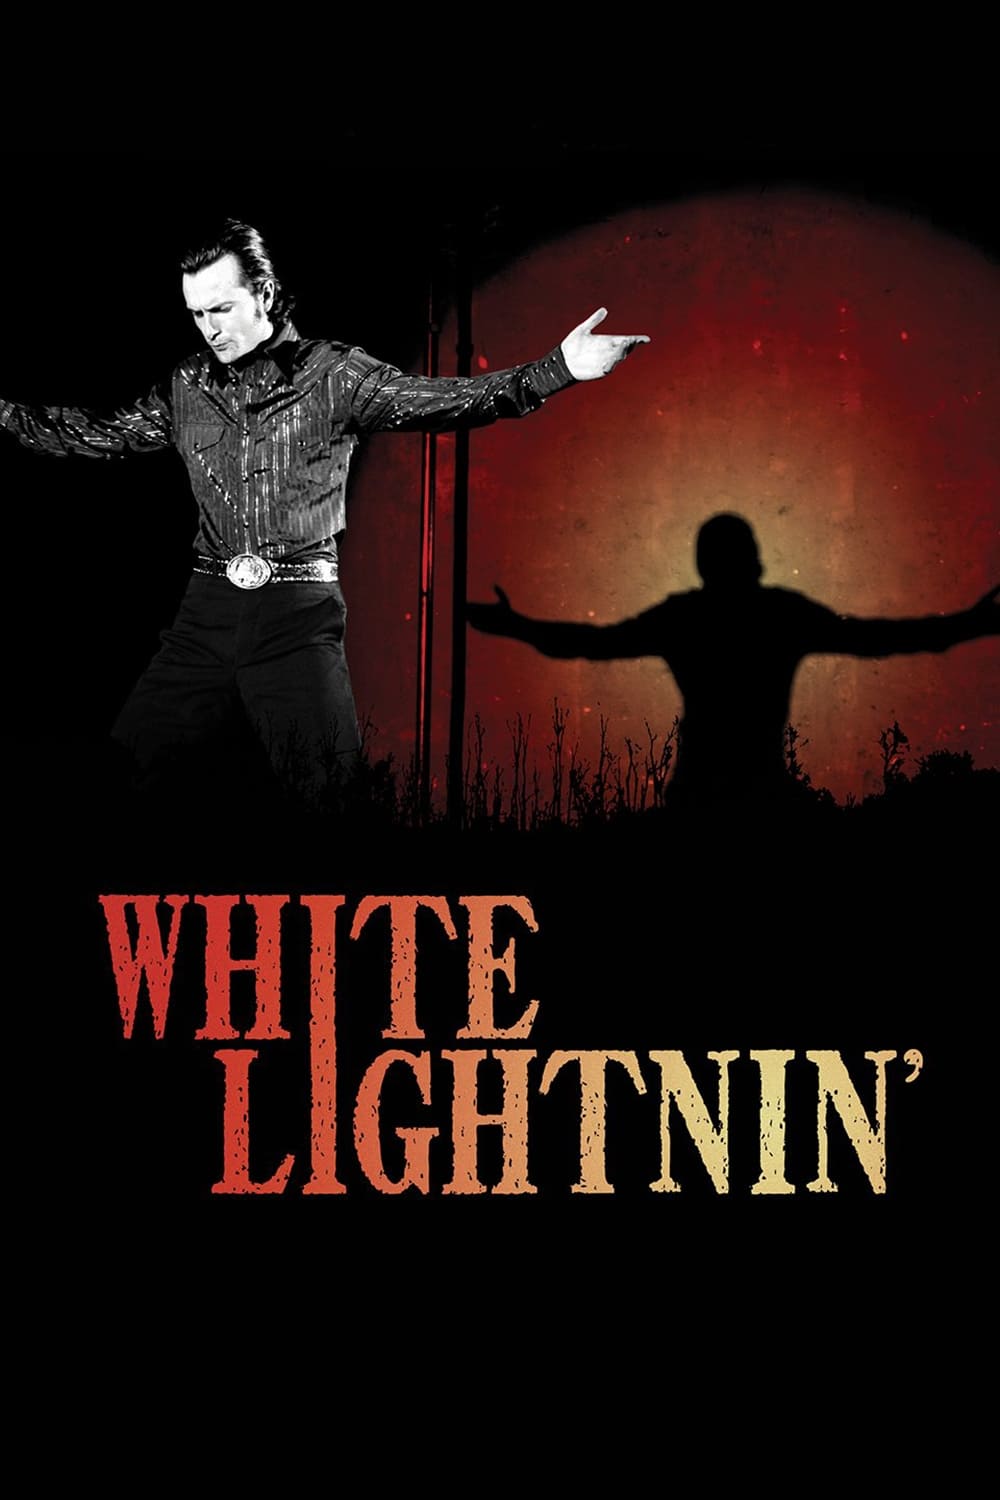 White Lightnin’ [Sub-ITA] [HD] (2008)